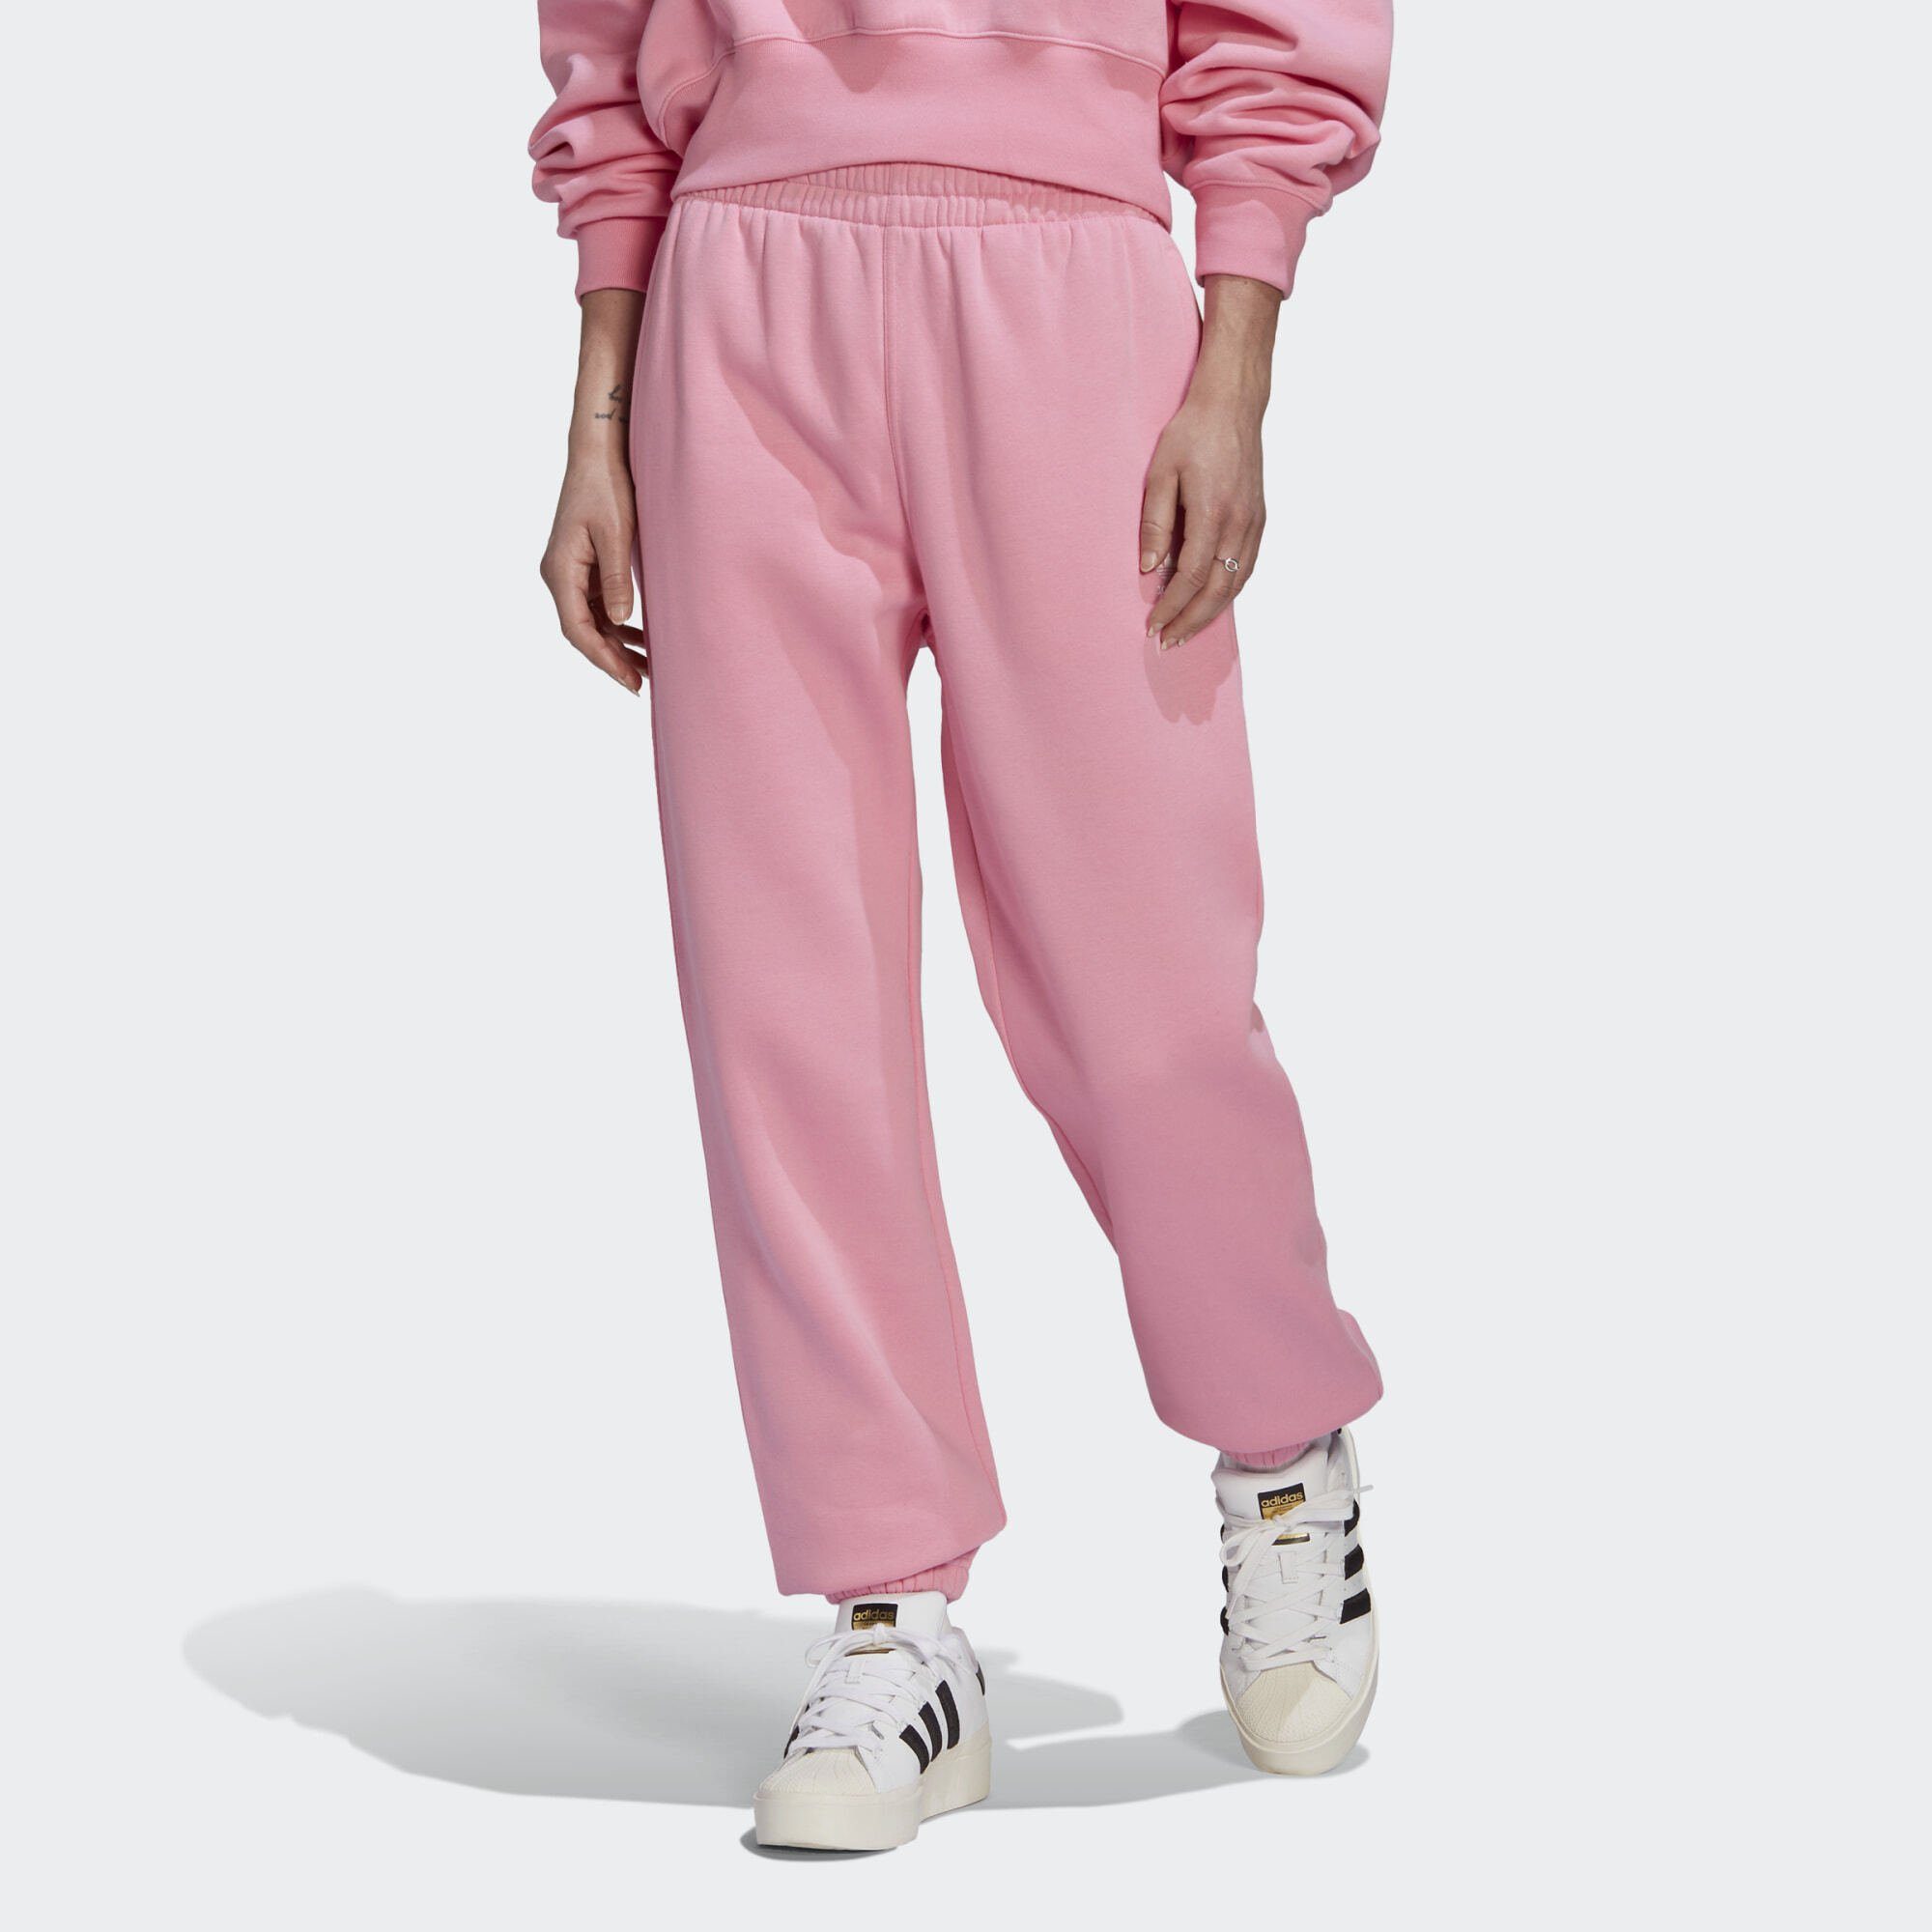 JOGGINGHOSE adidas Jogginghose Pink ADICOLOR FLEECE ESSENTIALS Originals Bliss